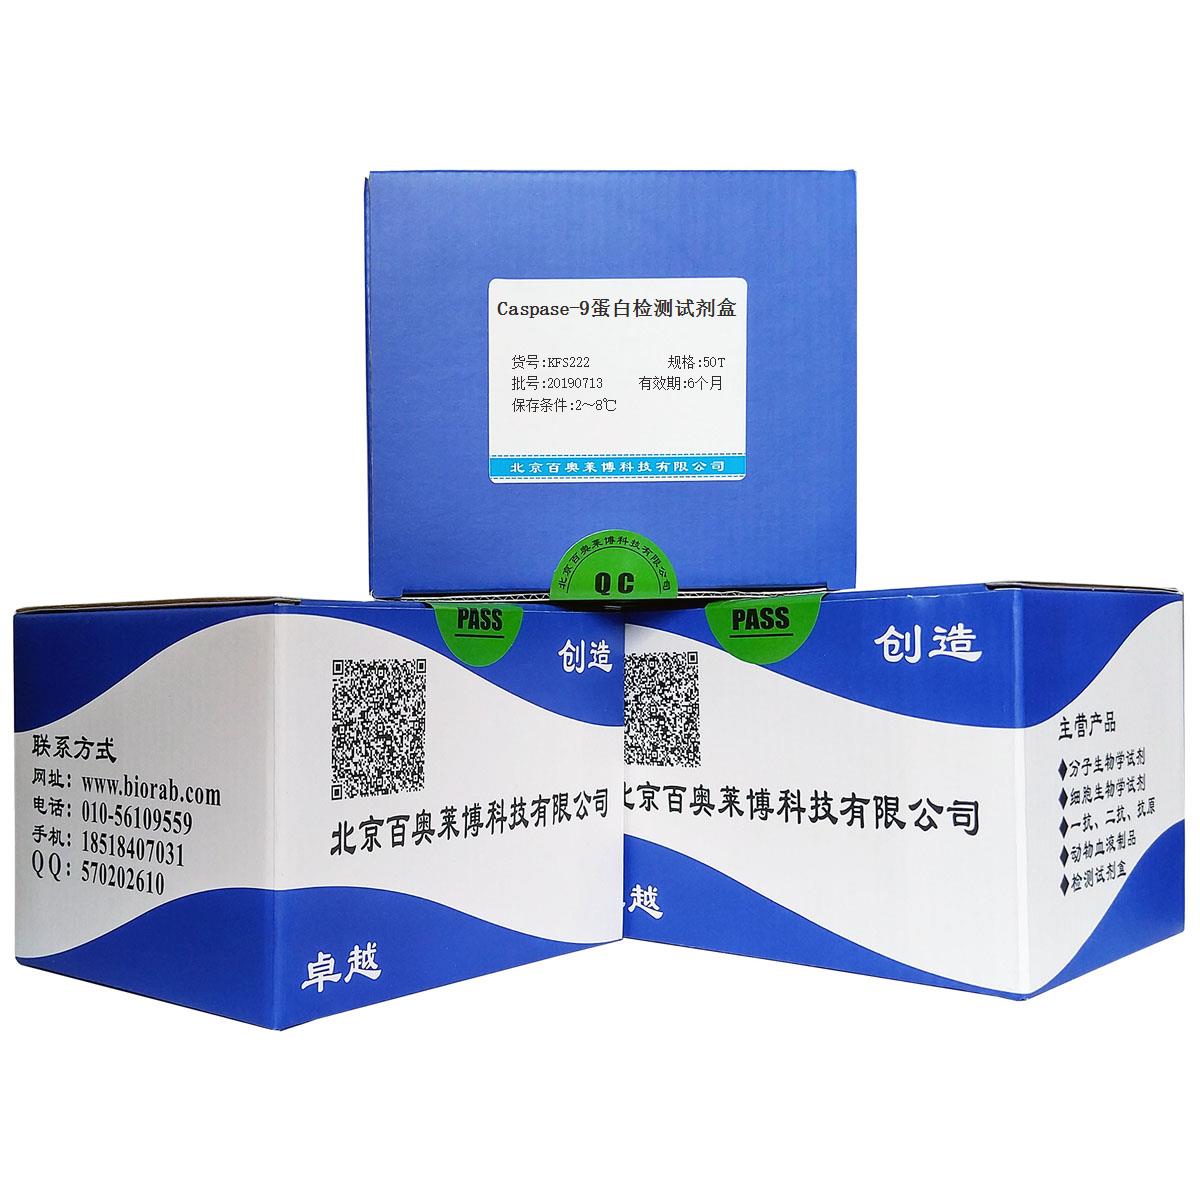 Caspase-9蛋白检测试剂盒北京供应商